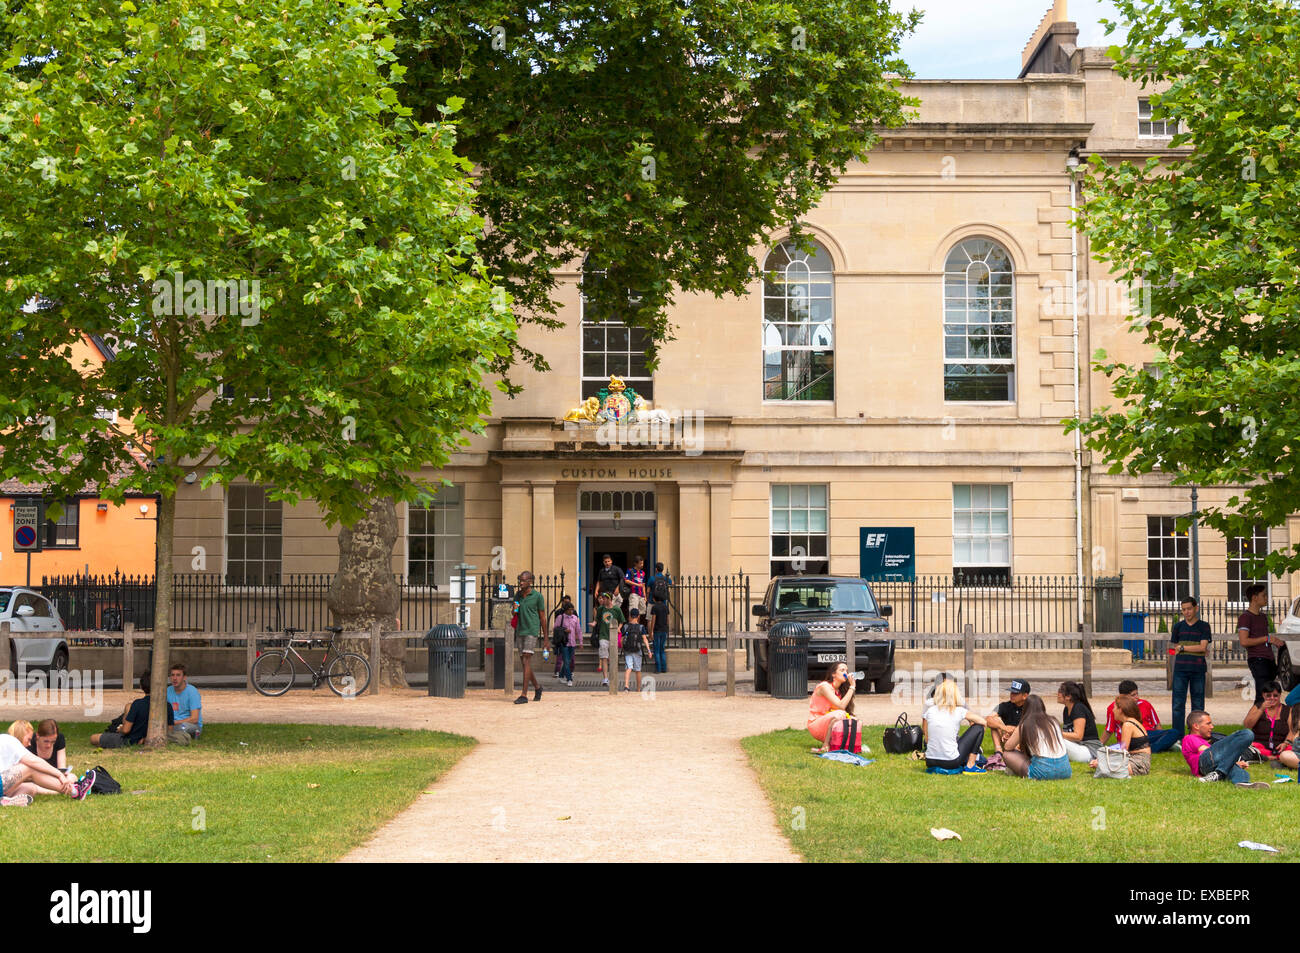 Custom House jetzt ein EF International Language School, Queen Square, Bristol, England, UK Stockfoto